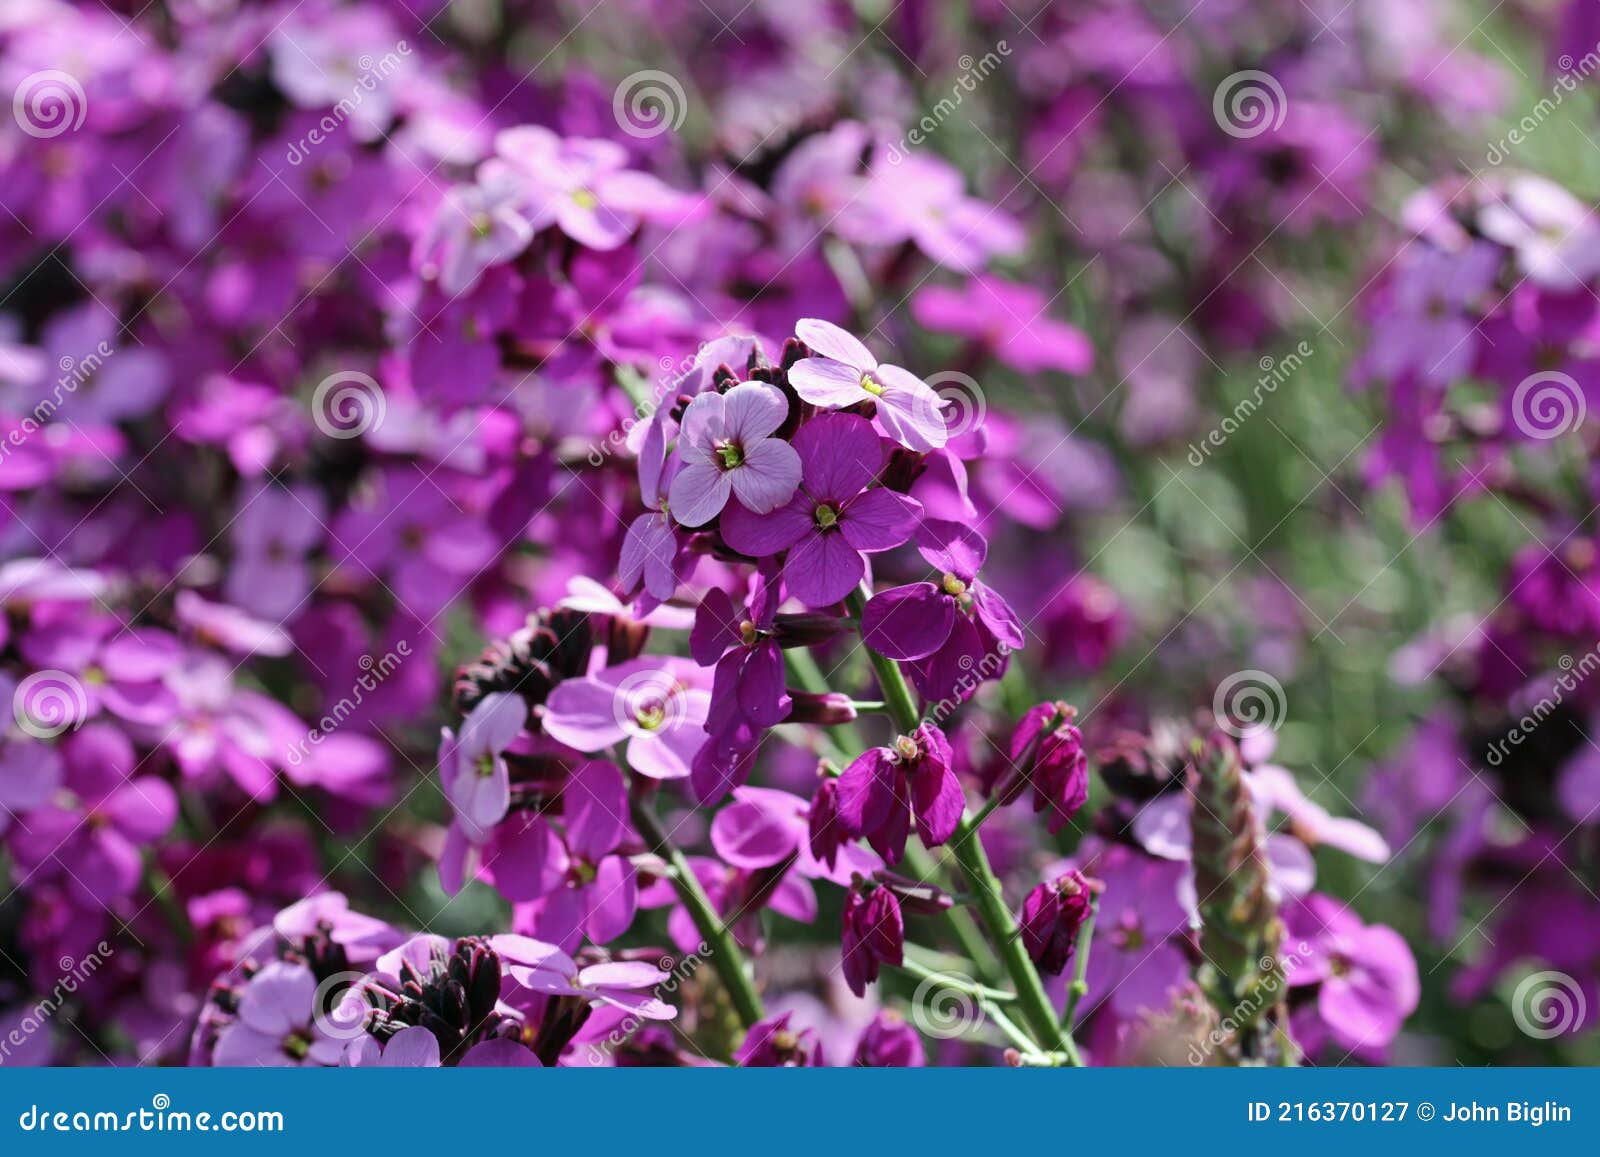 purple everlasting wallflower flower spikes